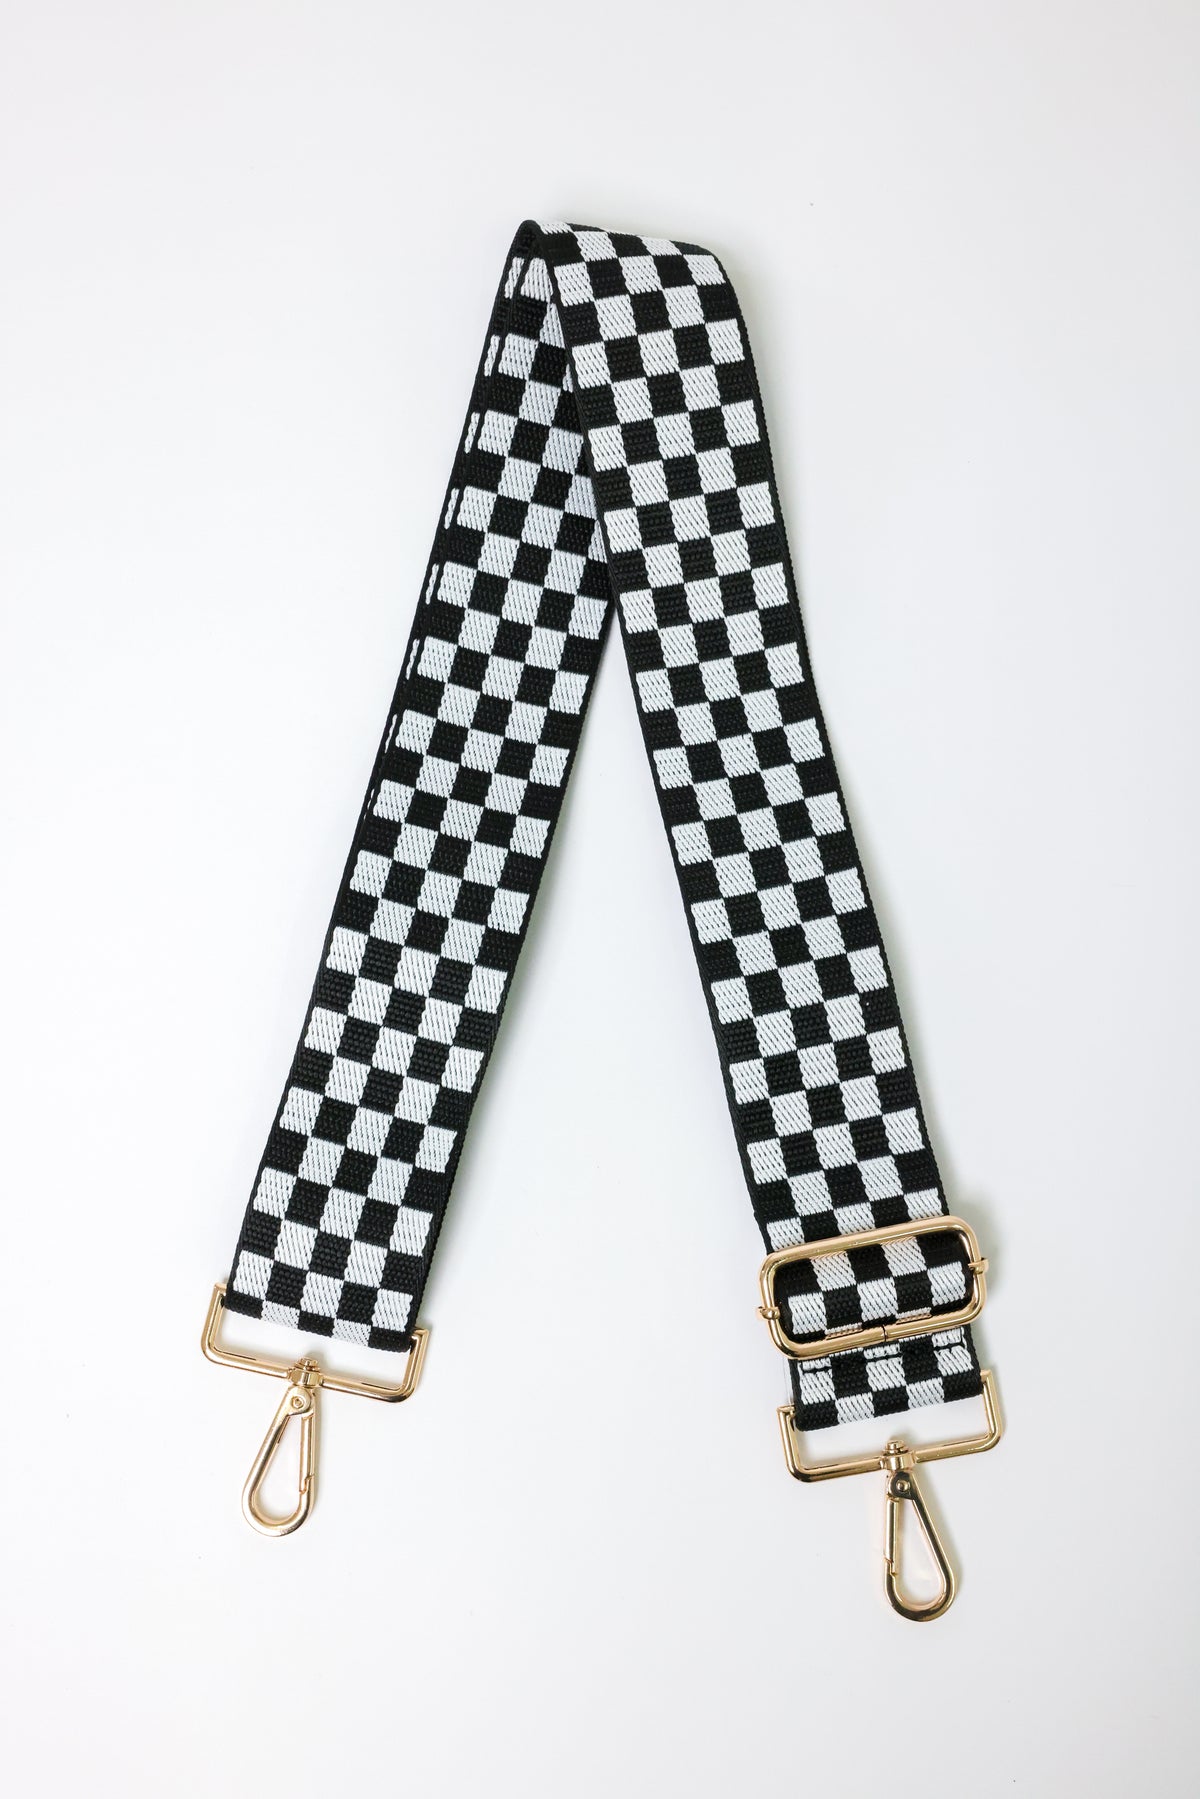 Checkerboard Black White Bag Strap